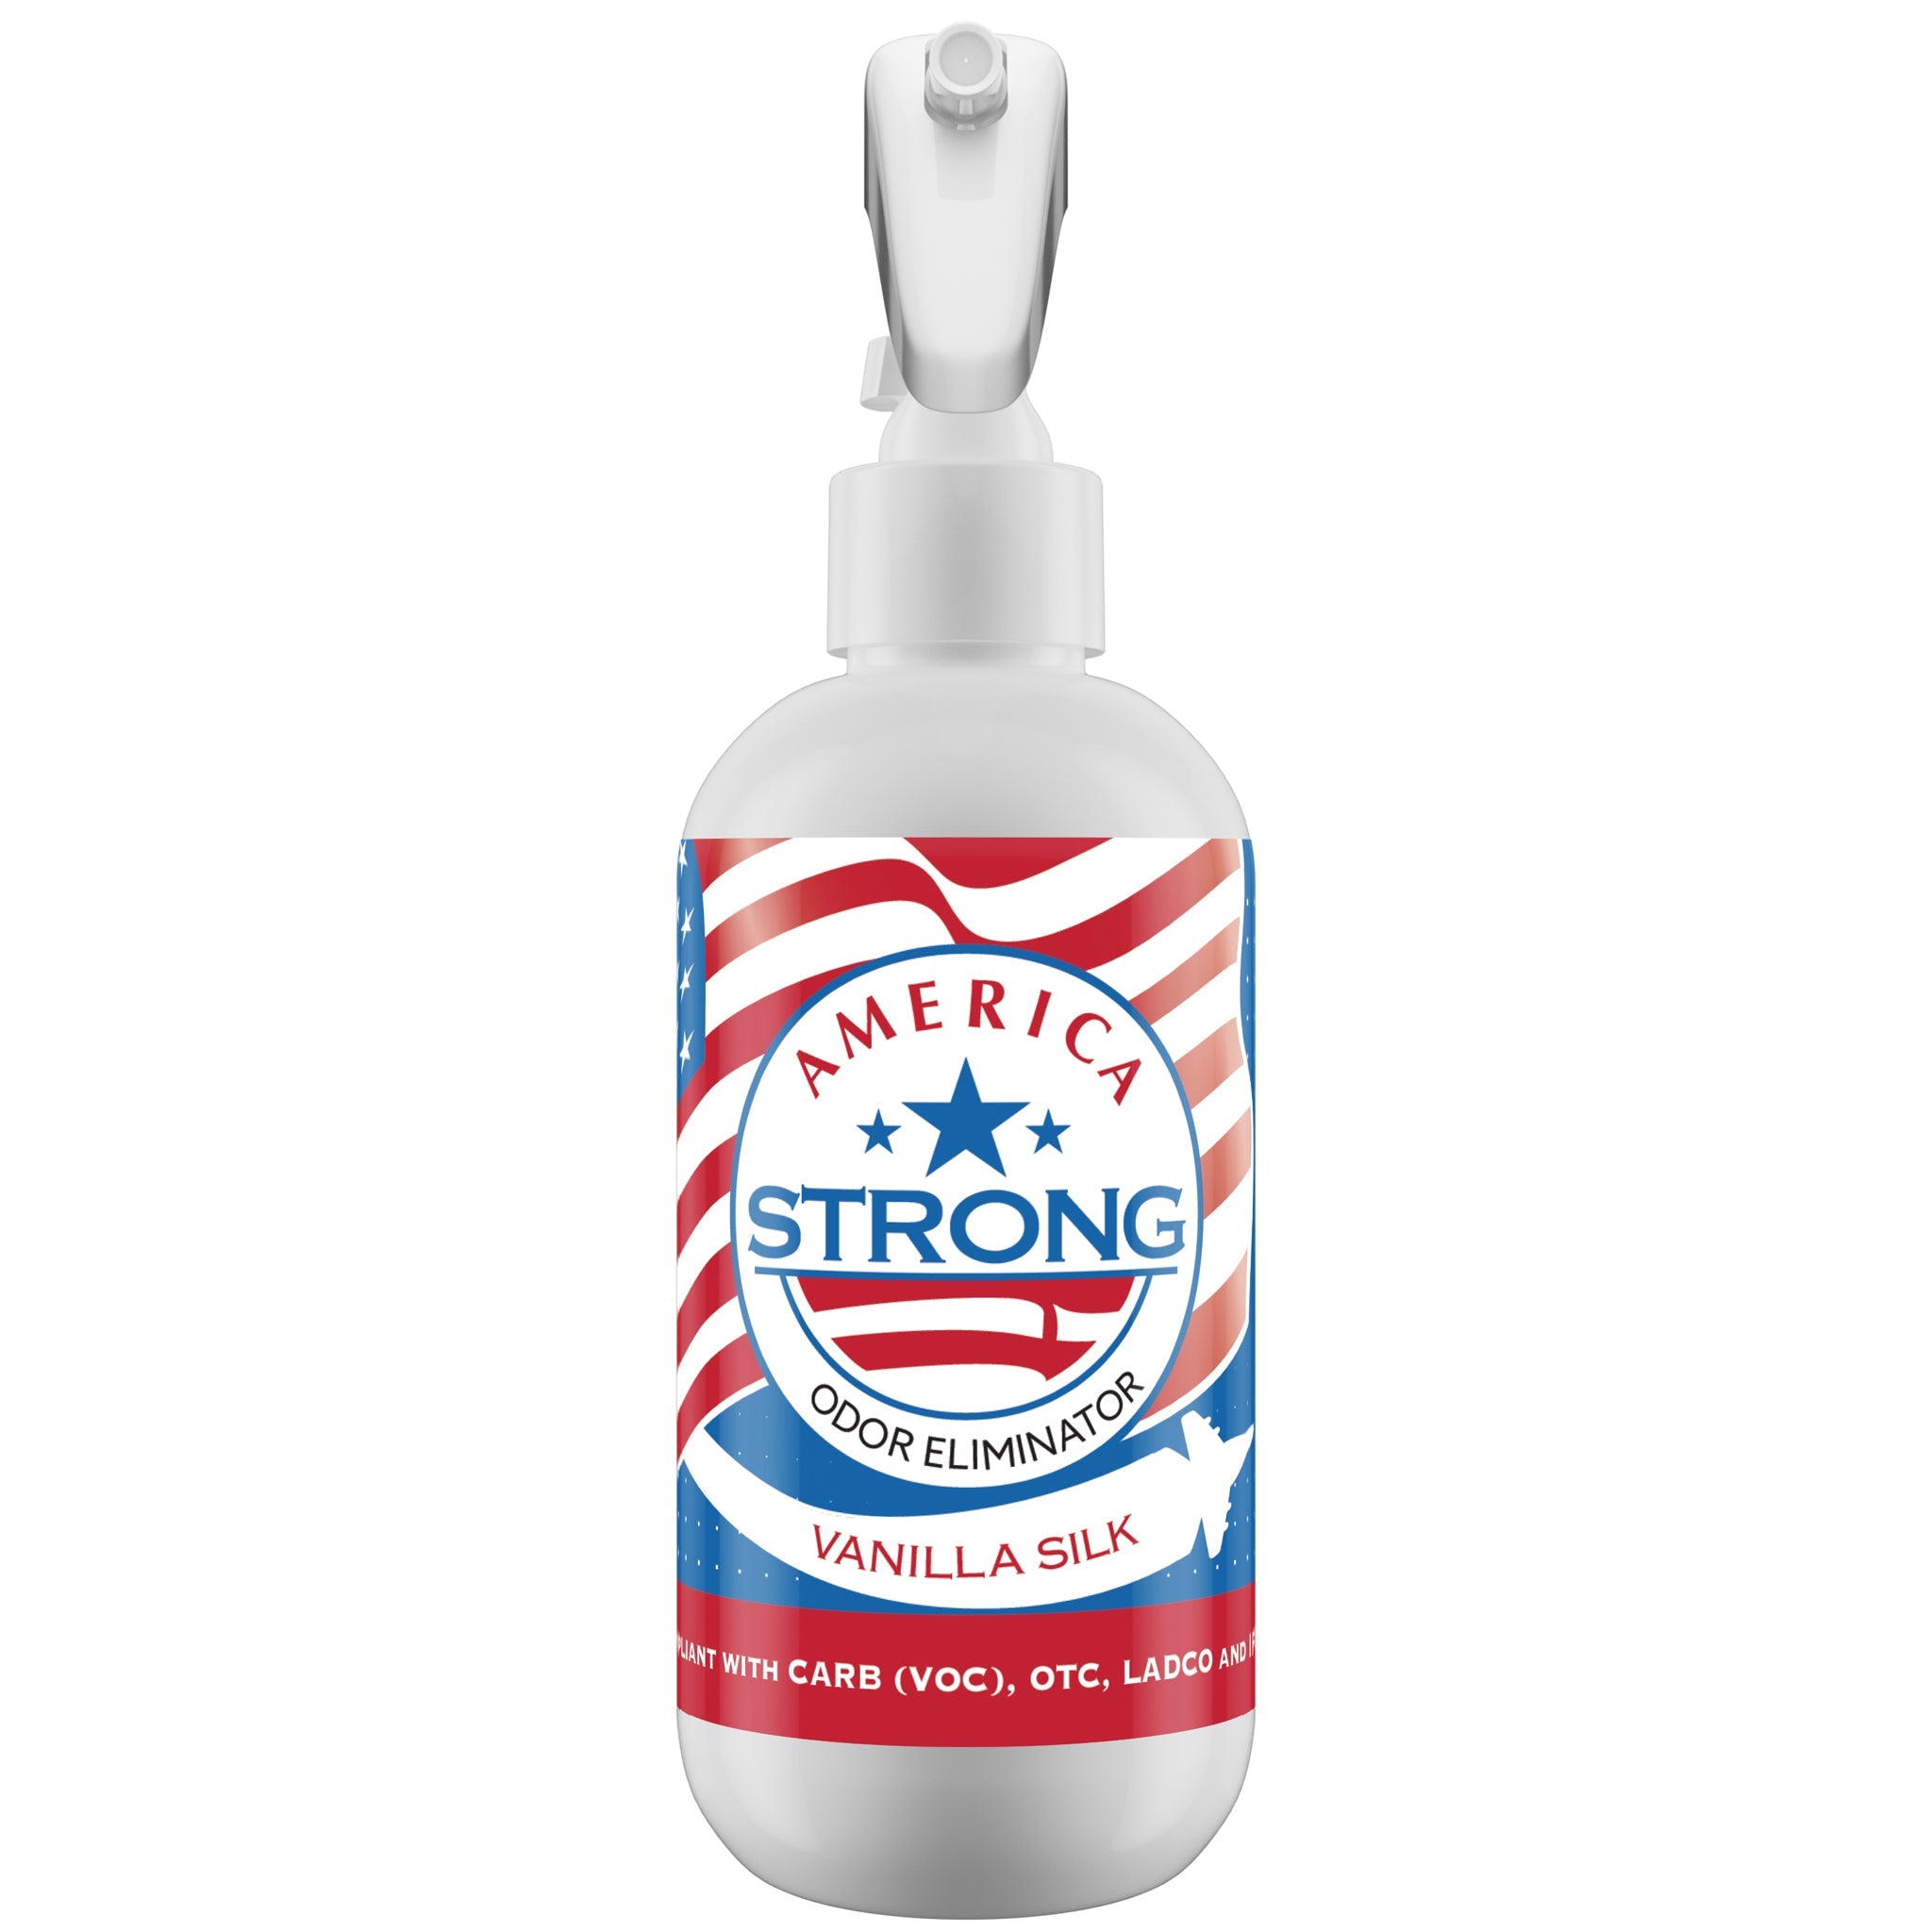 America Strong Odor Eliminator - Vanilla Silk Scent Size: 8.0oz